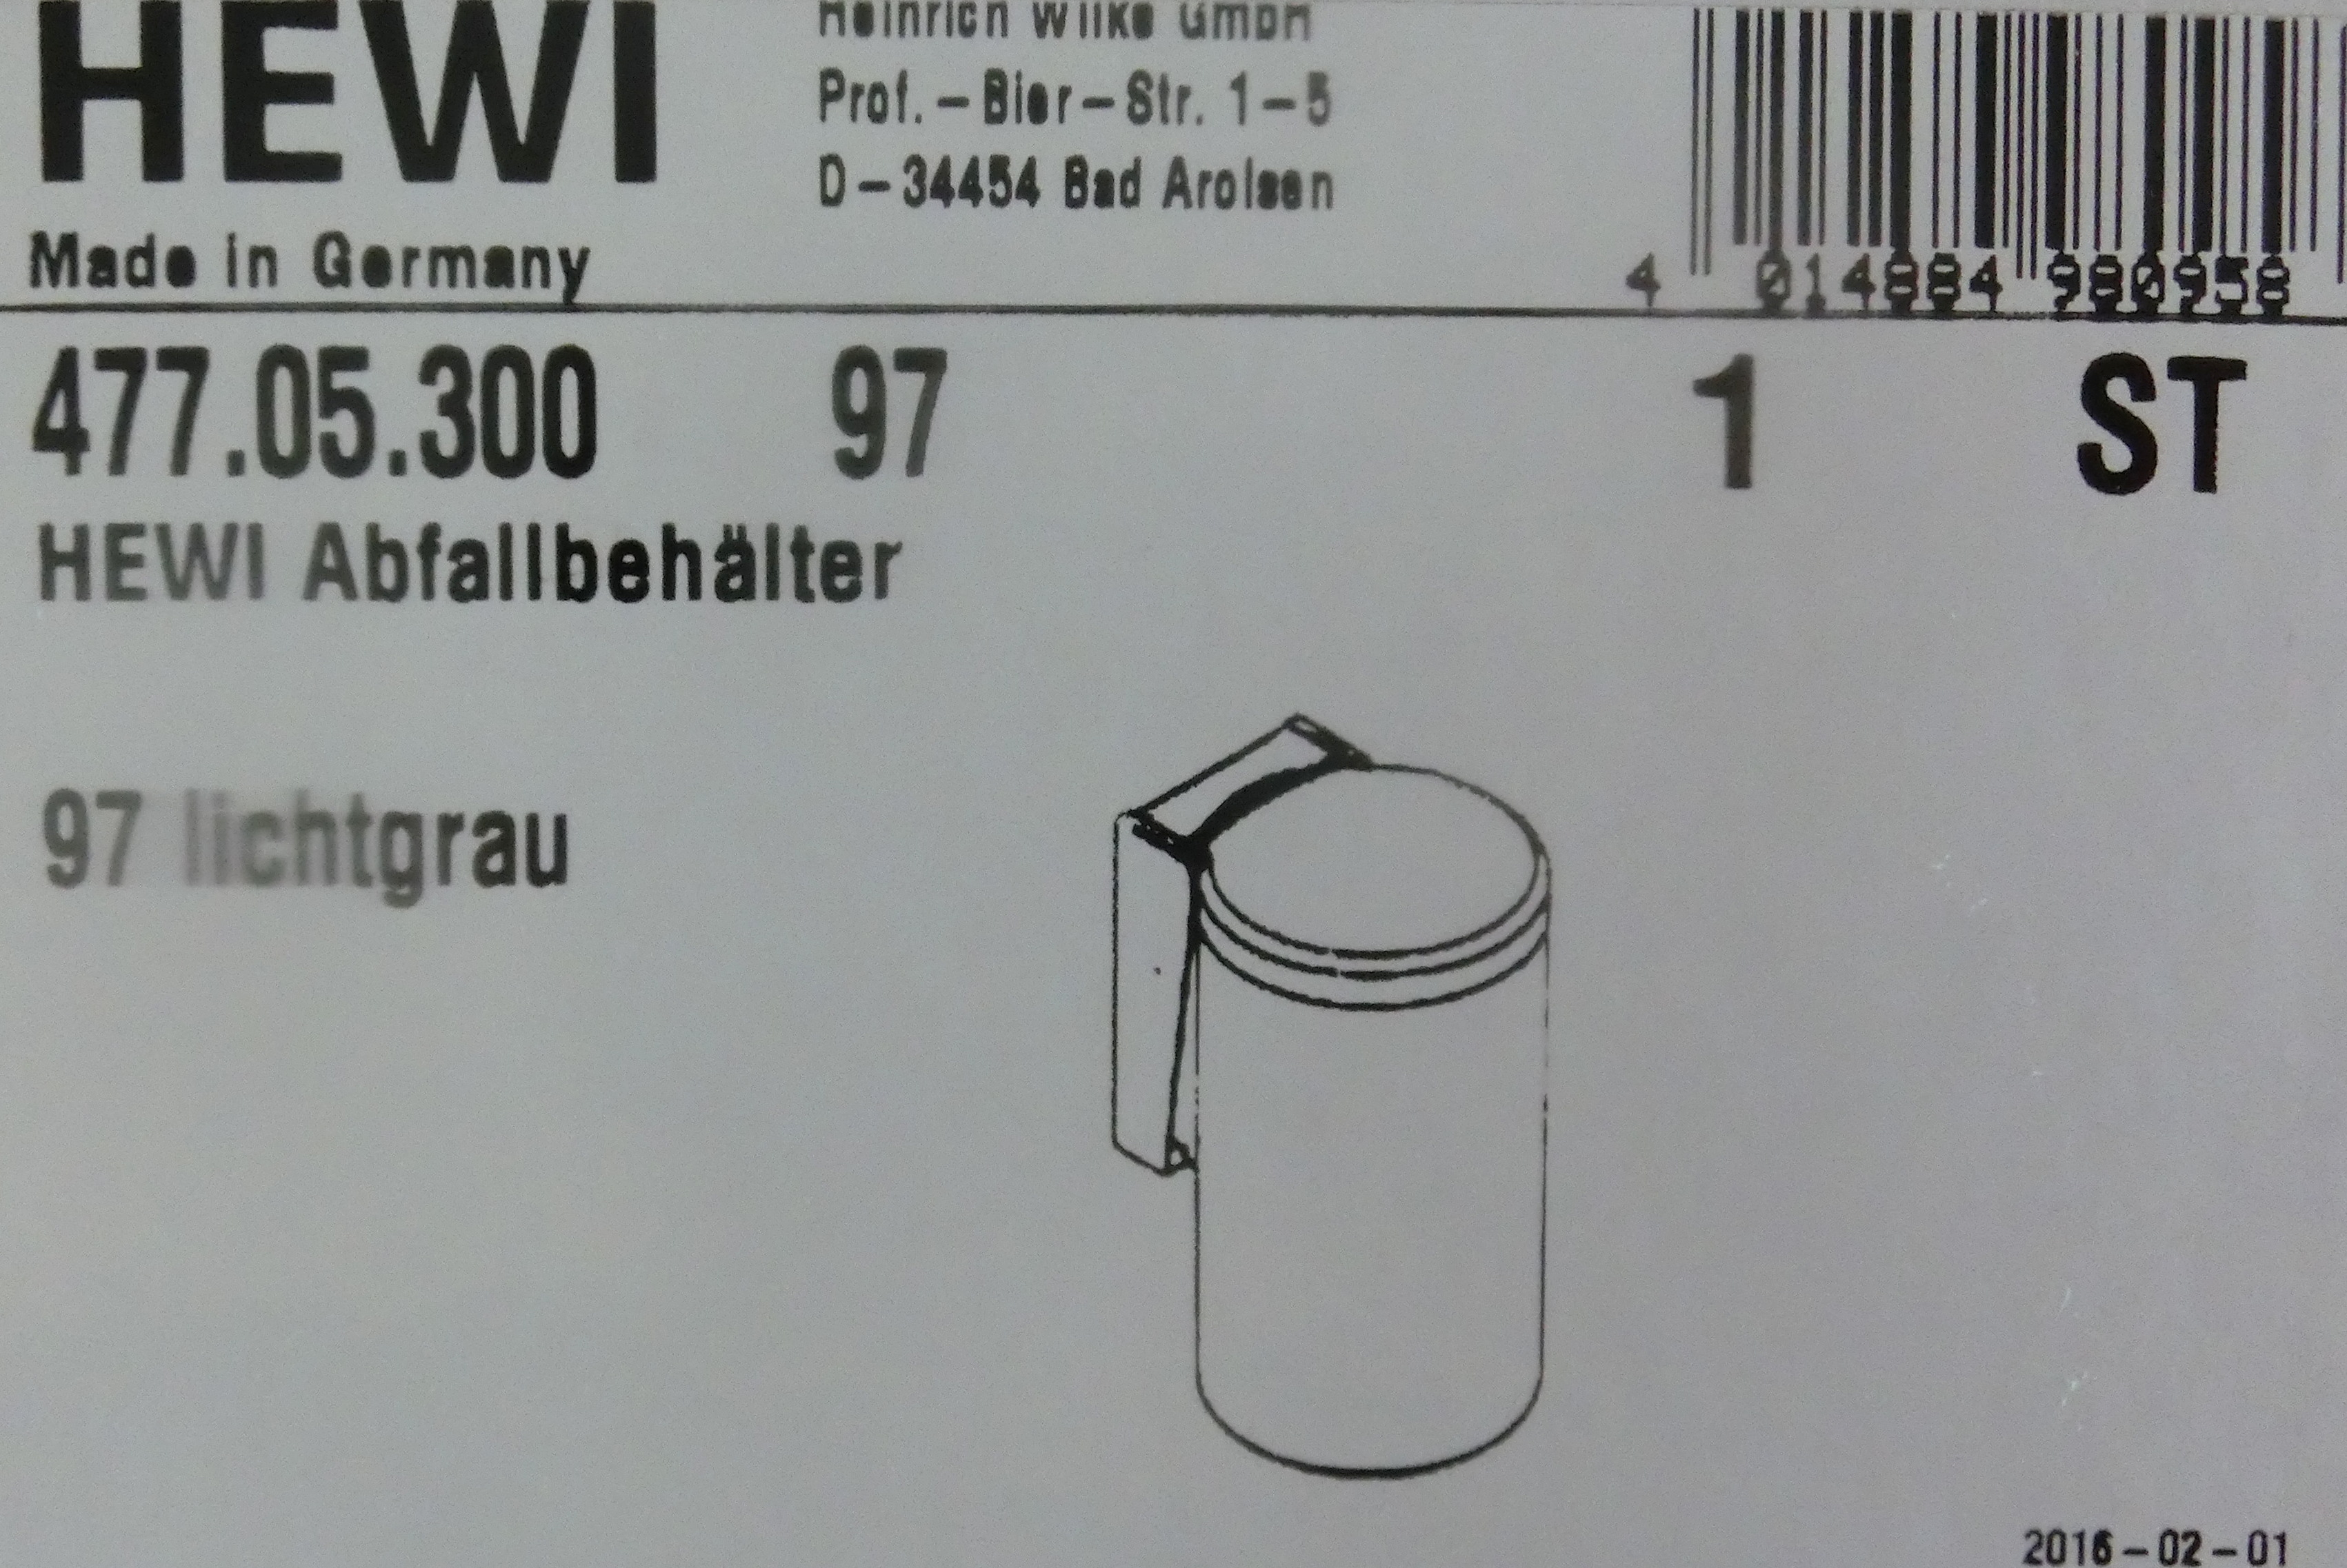 Hewi Serie 477 Abfallbehälter sand; 477.05.300-86 